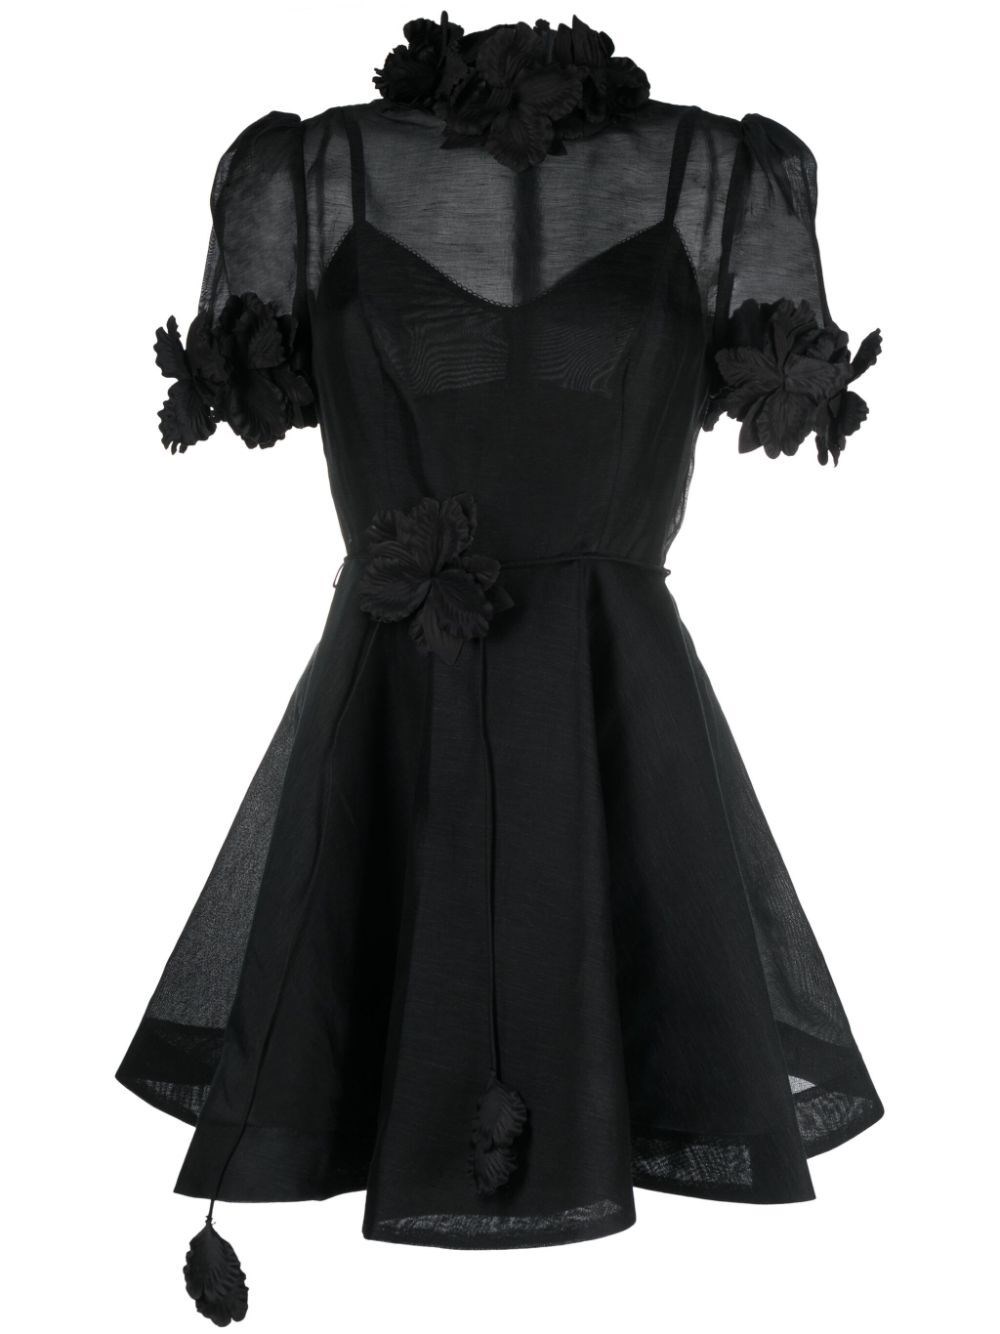 Prada Black Floral Silk Doctor Bag - Ann's Fabulous Closeouts